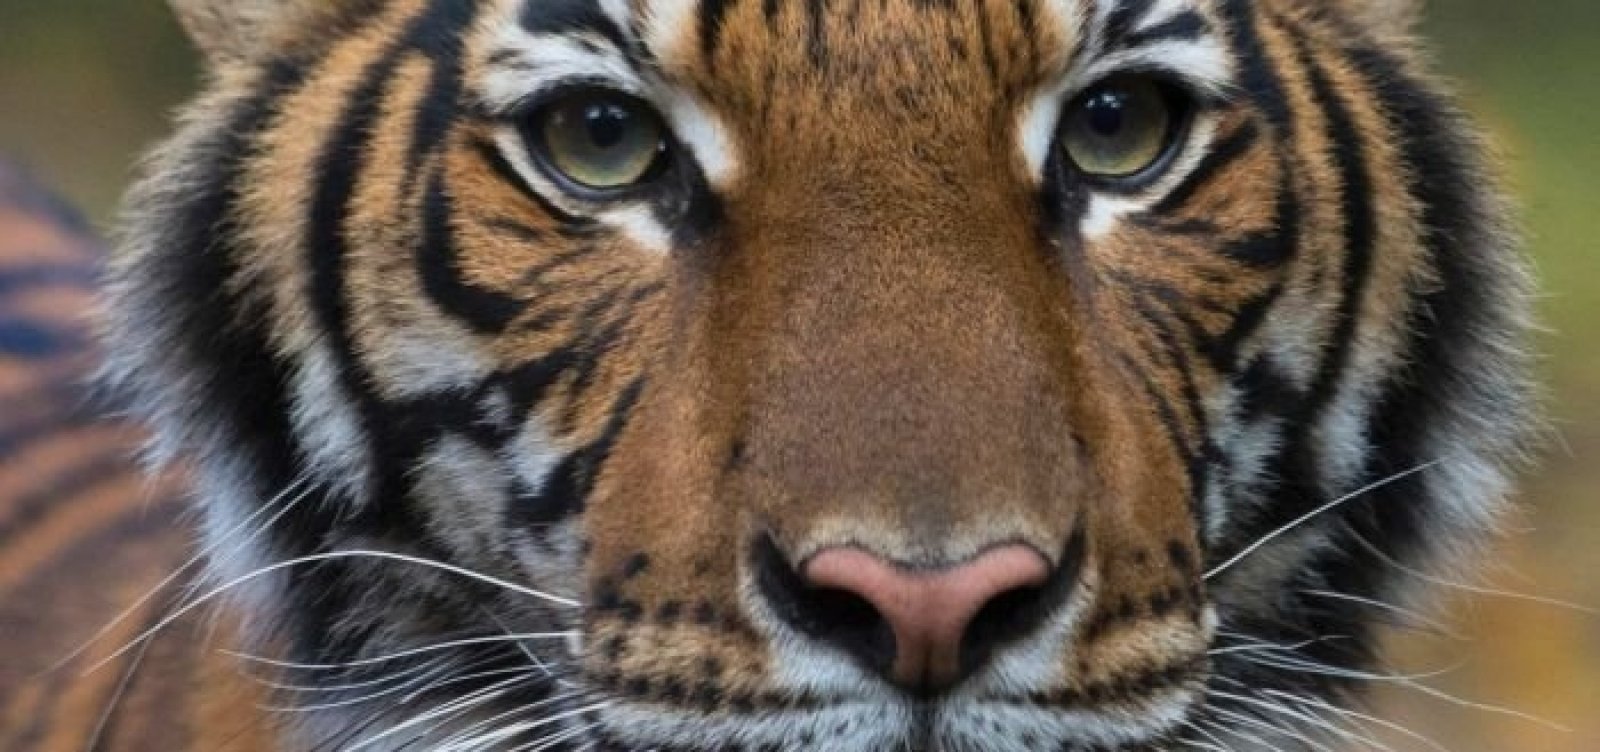 Tigre testa positivo para coronavírus em zoológico de Nova York